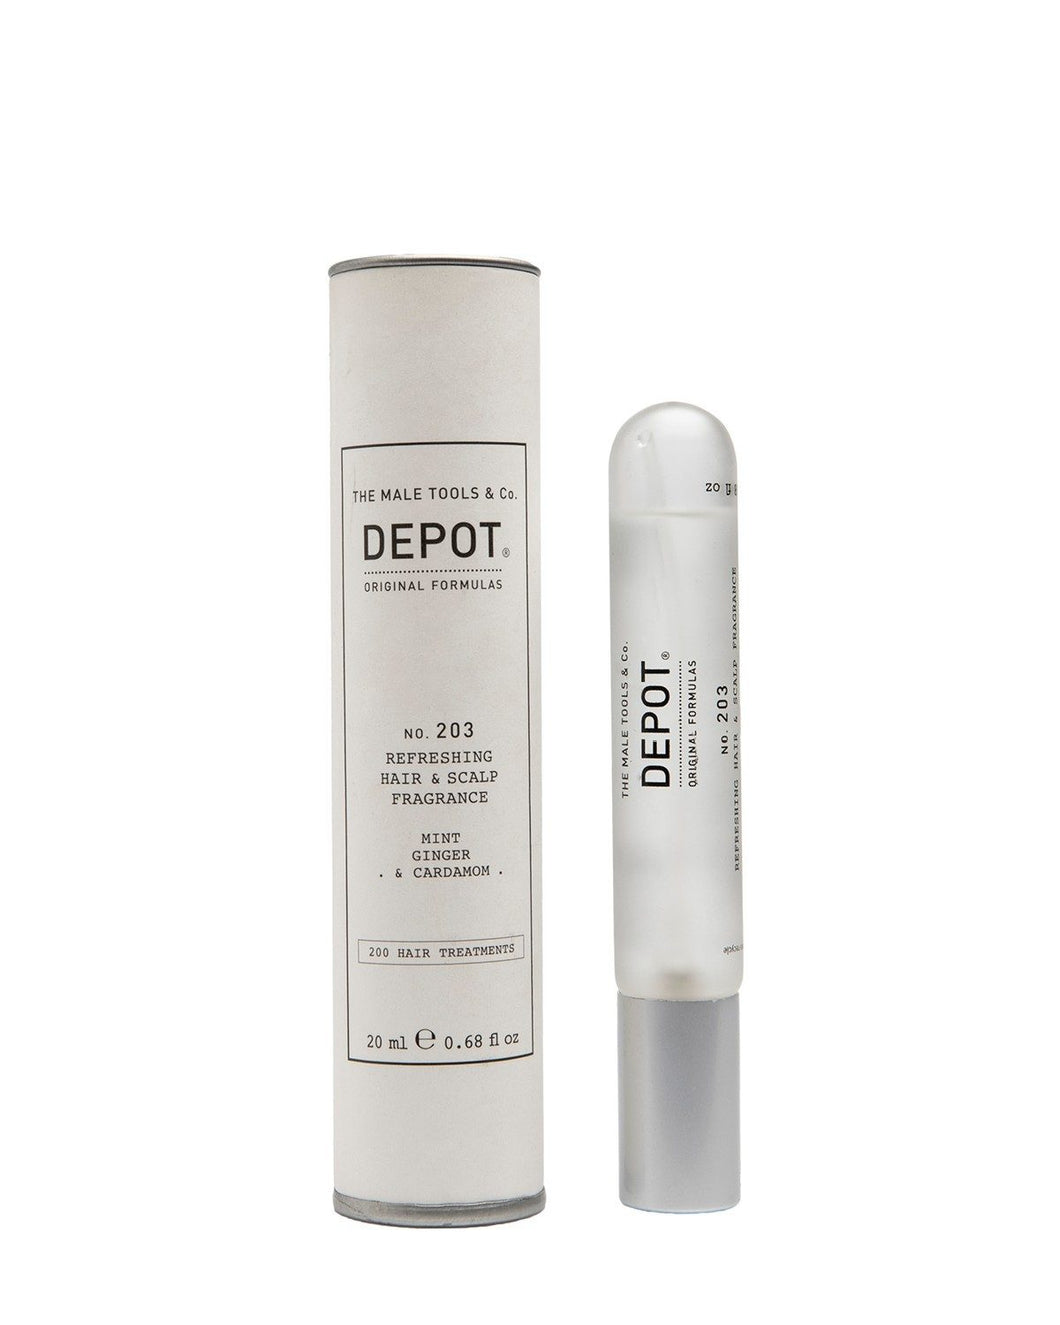 Depot 203 – Refreshing Hair & Scalp Fragrance 20ml